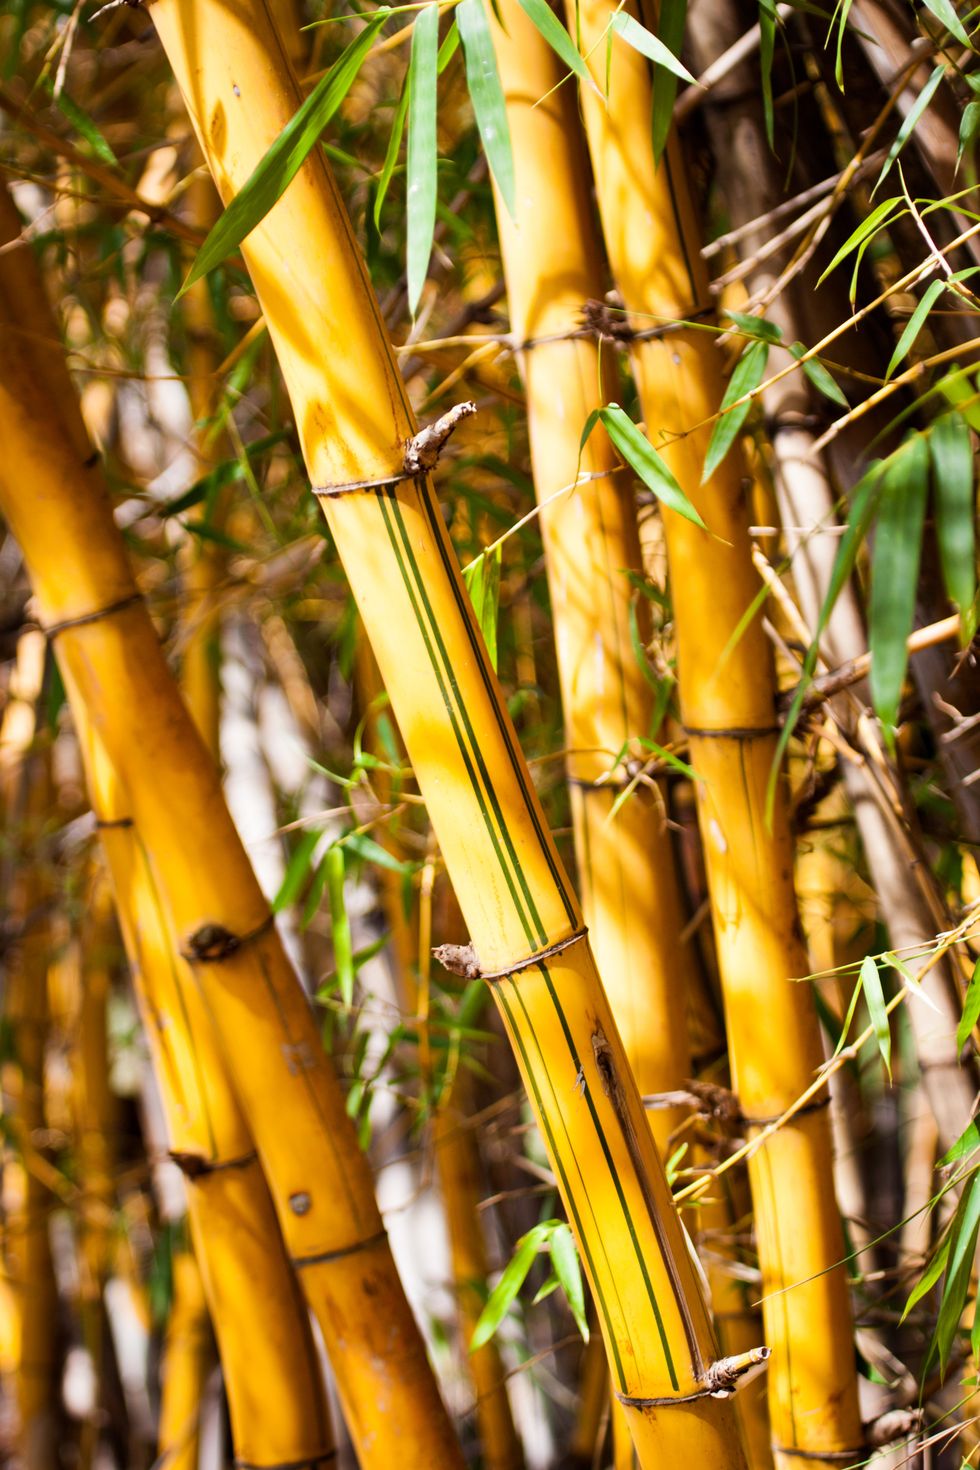 Golden bamboo stem of common bamboo - Bambusa vulgaris